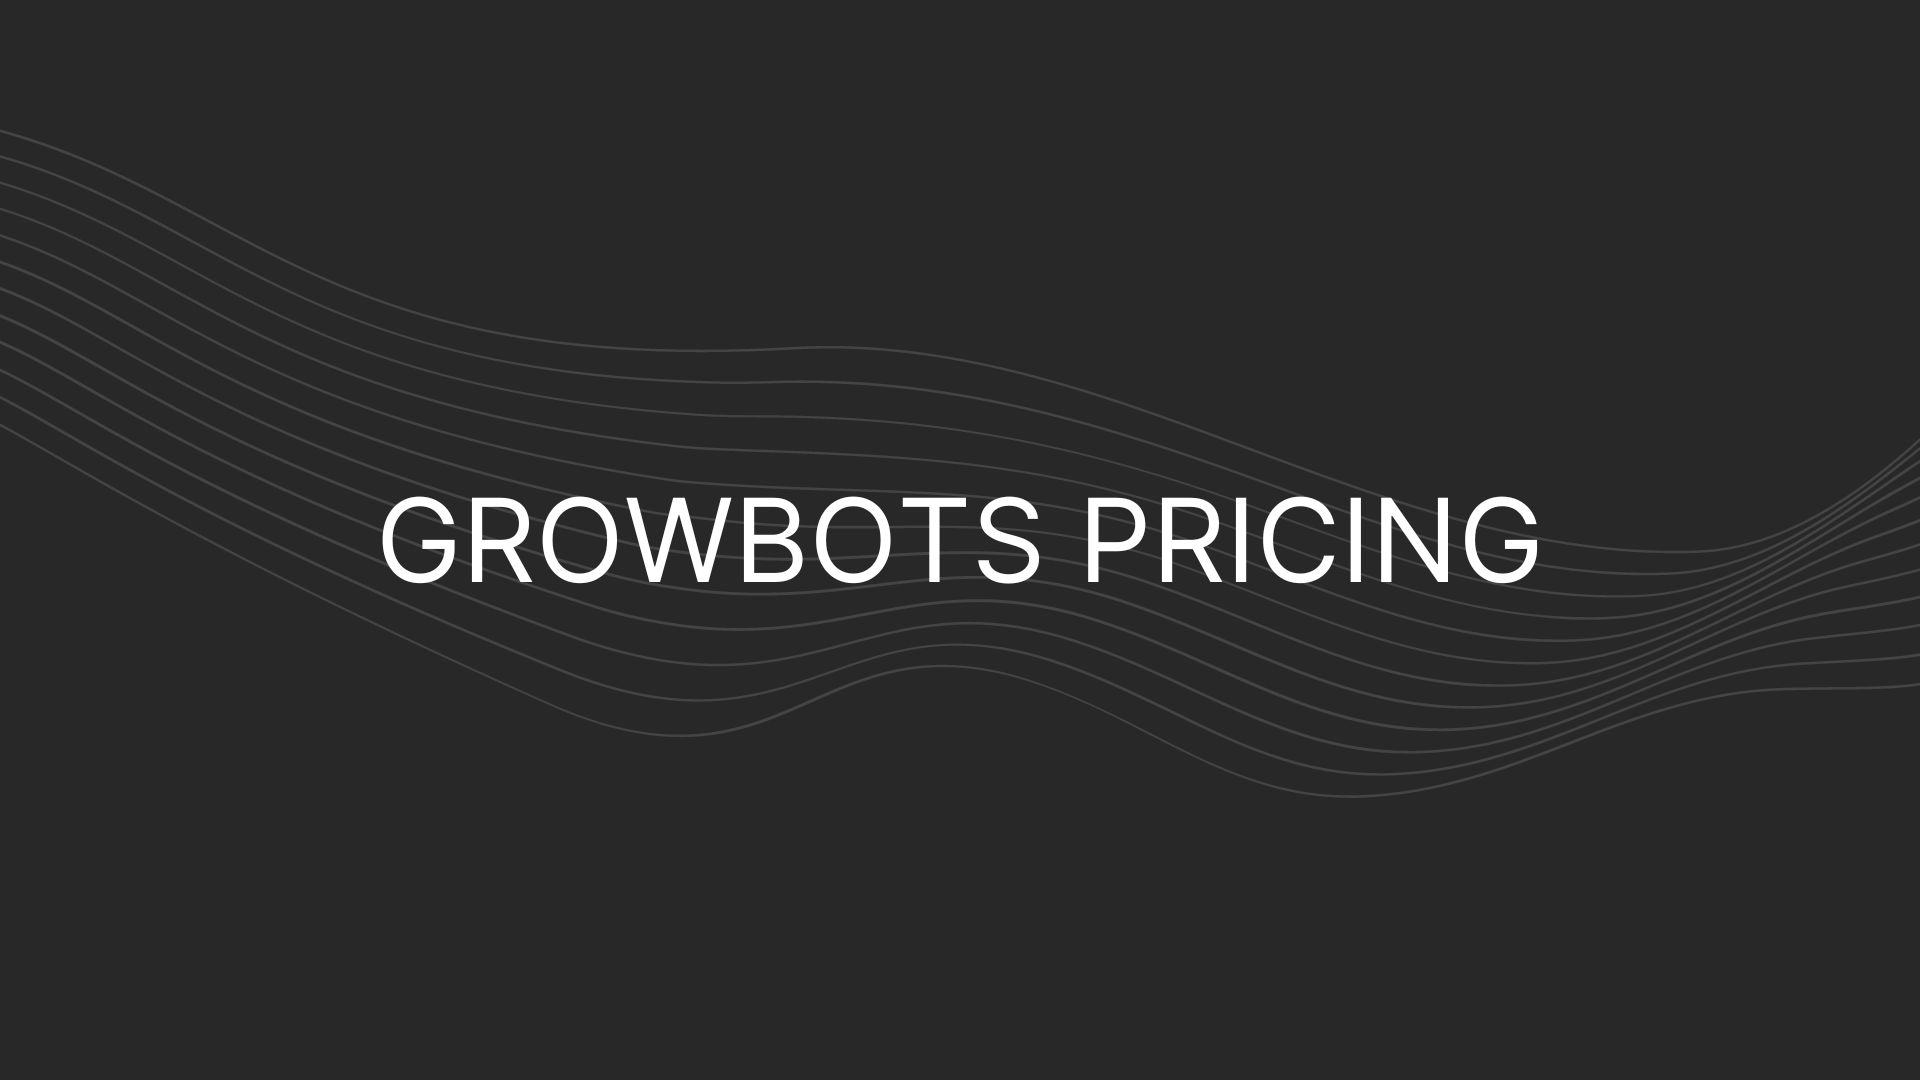 Growbots pricing